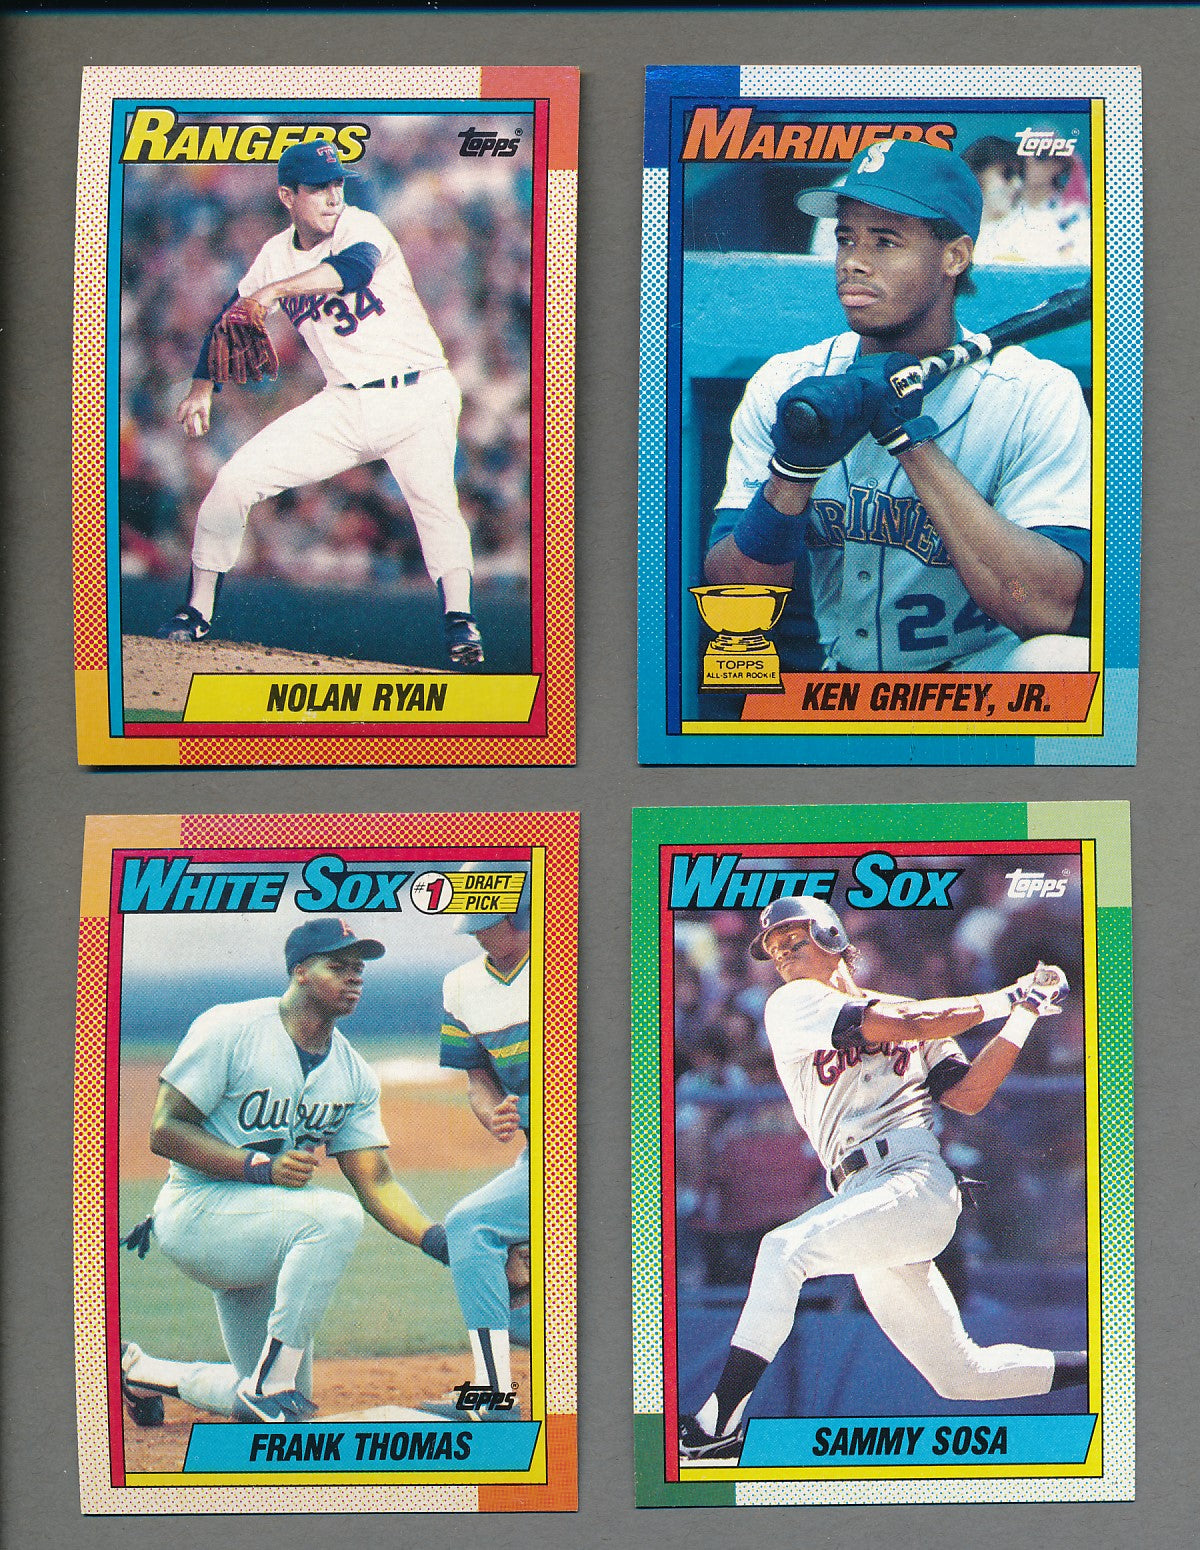 1990 Topps Baseball Complete Set (792)  NM/MT MT